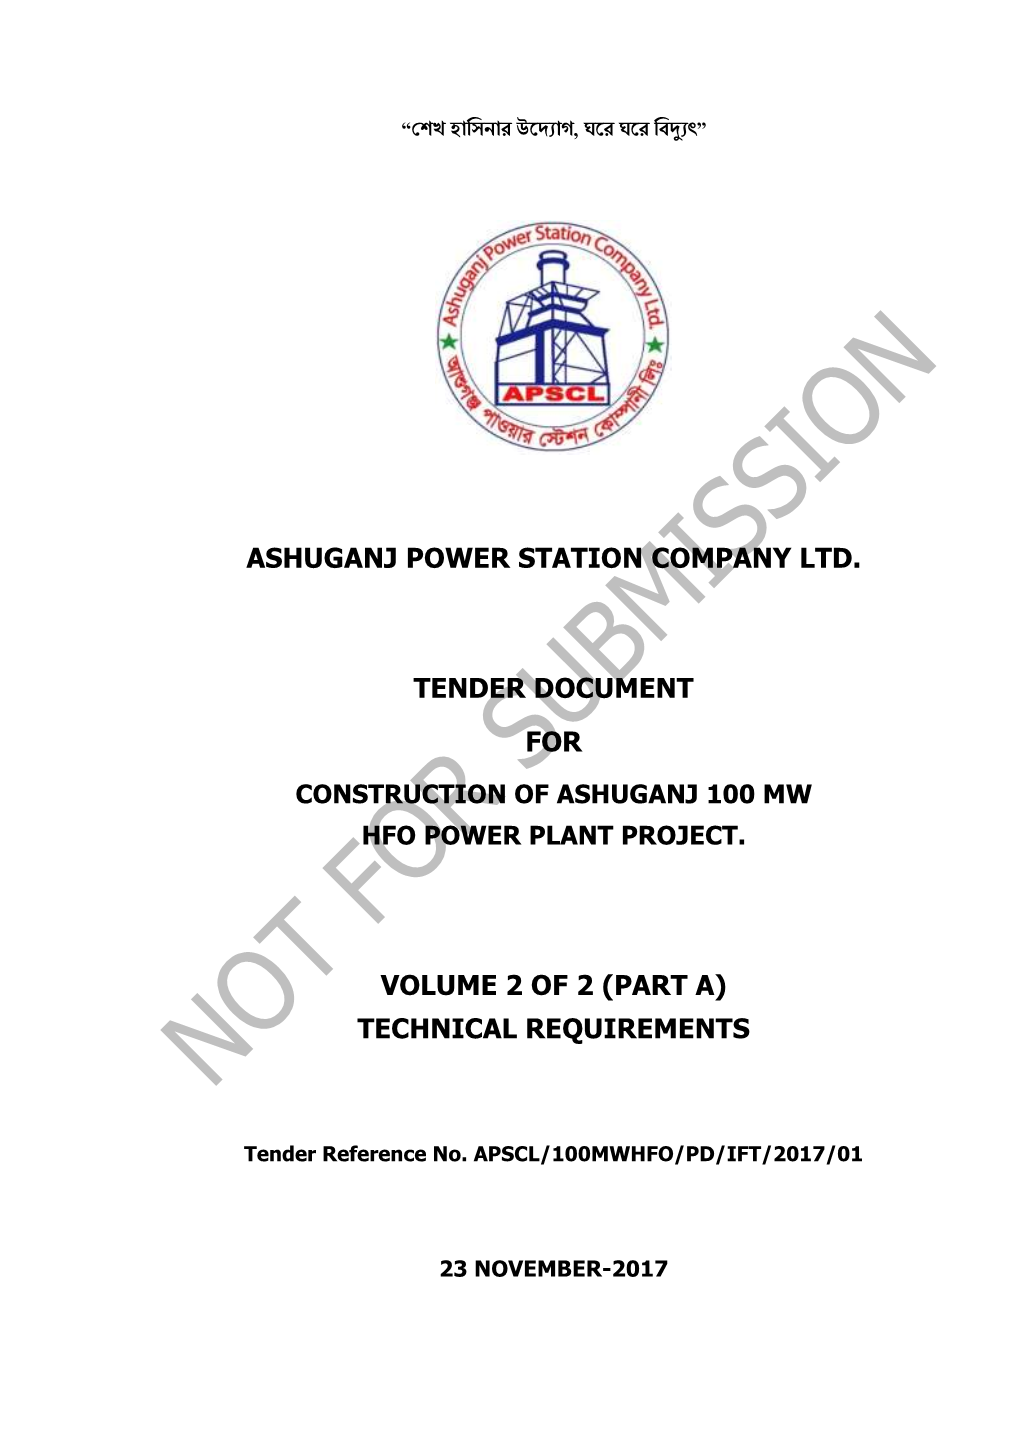 Ashuganj Power Station Company Ltd. Tender